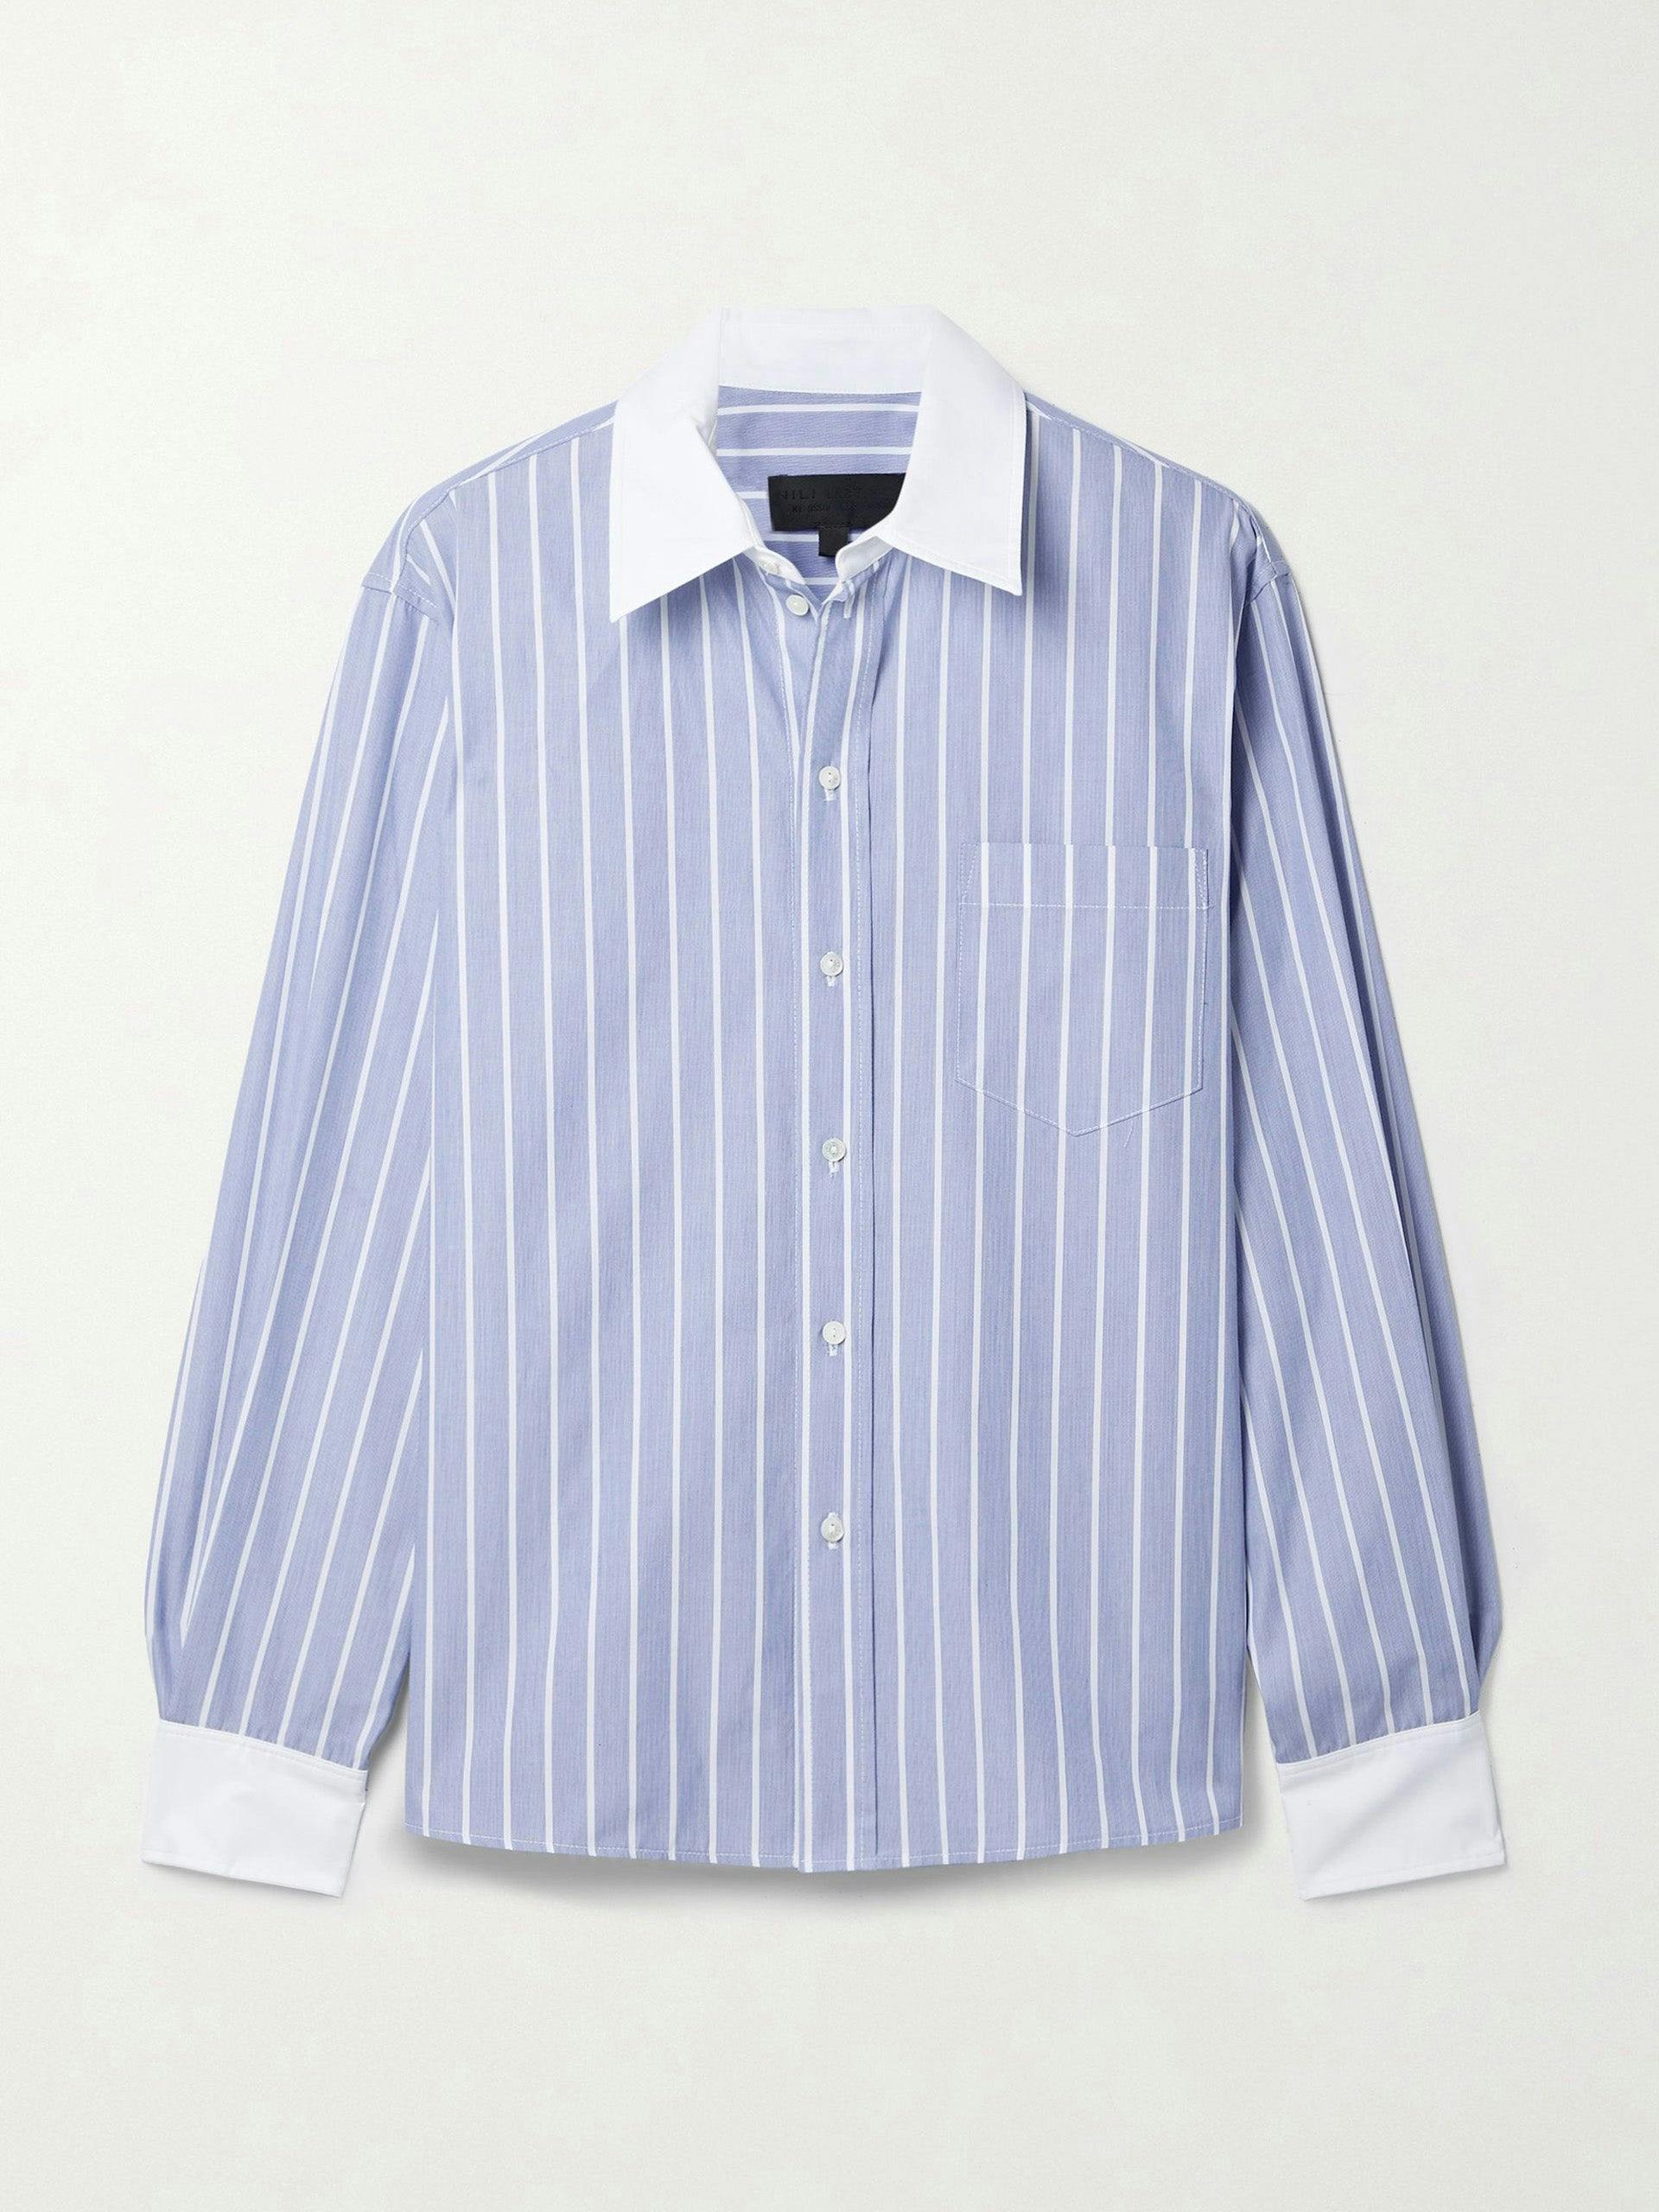 Blue and white pinstripe shirt